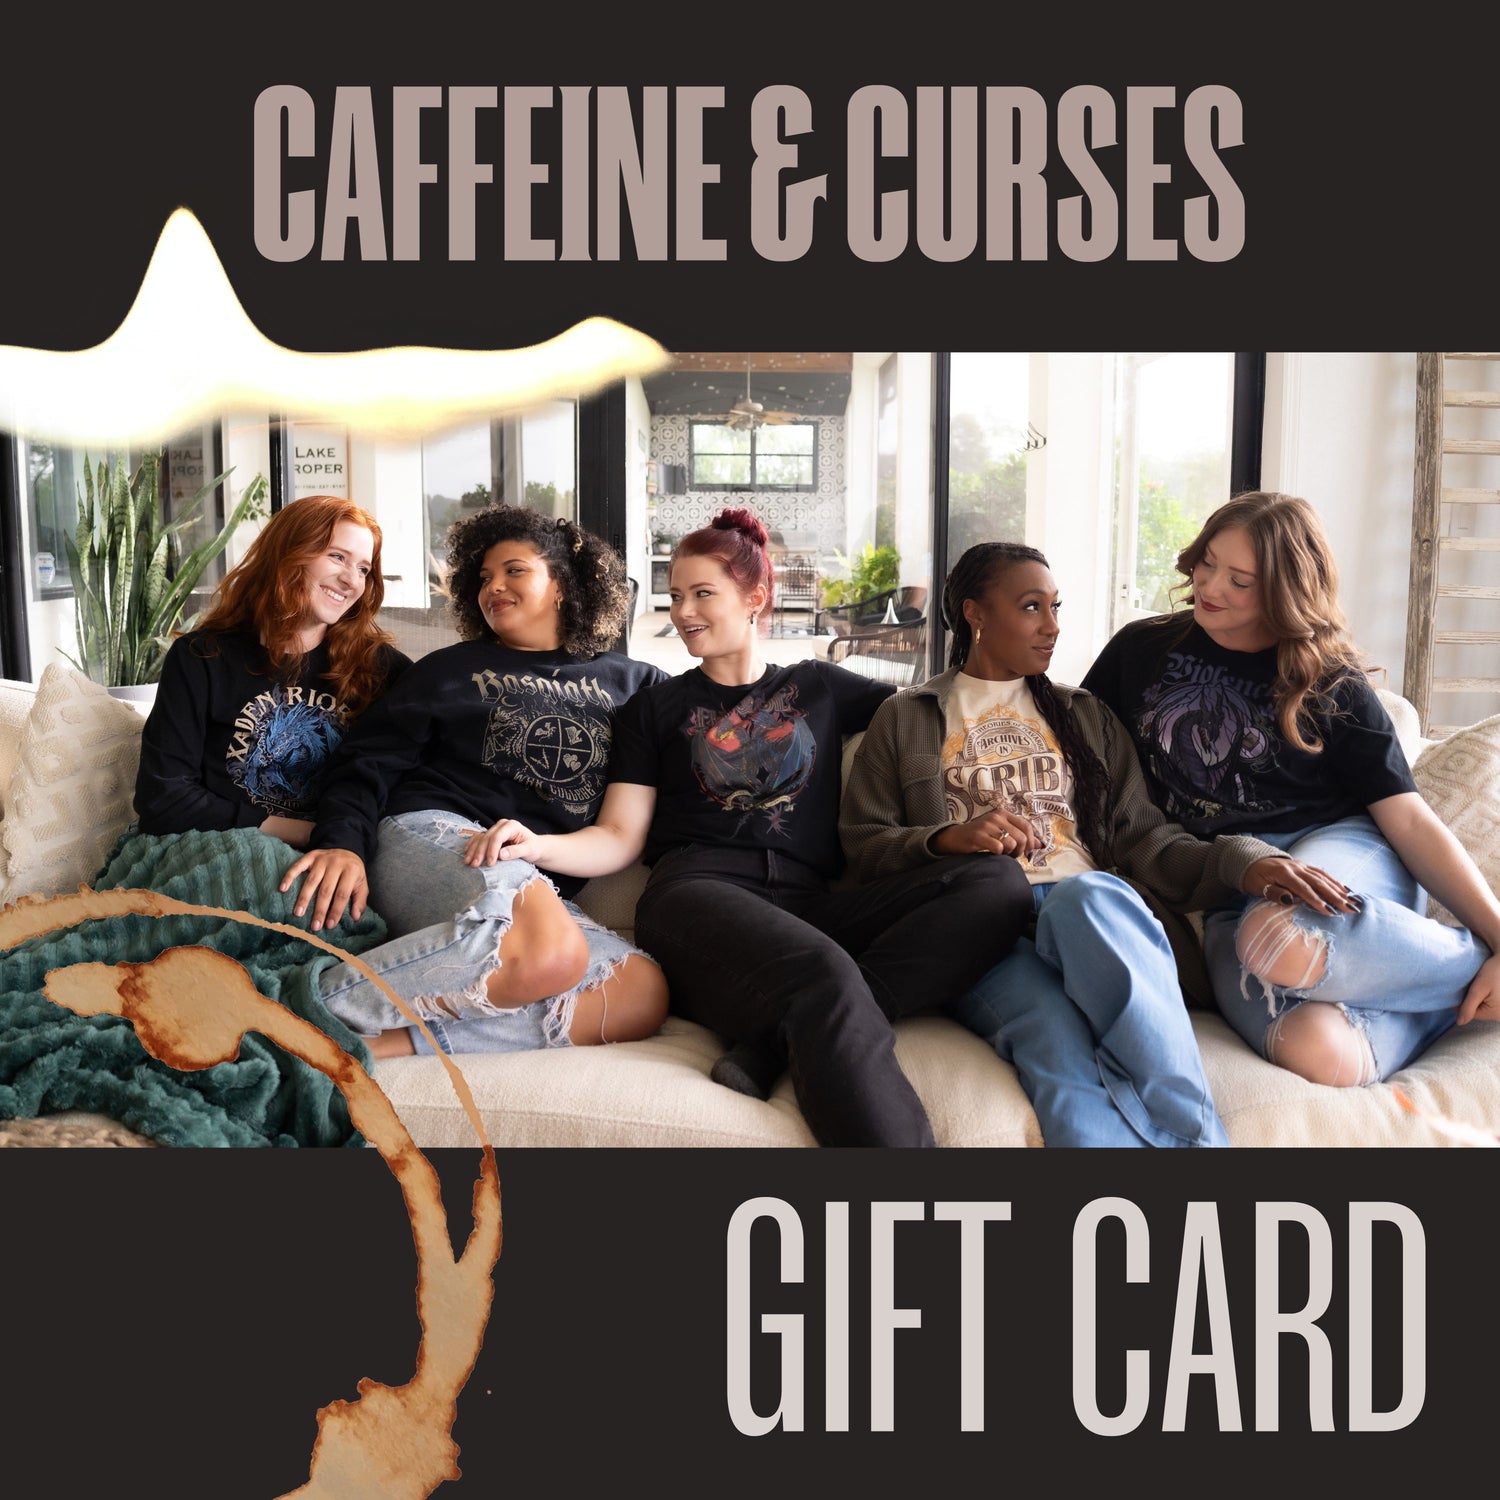 CAFFEINE AND CURSES GIFT CARD